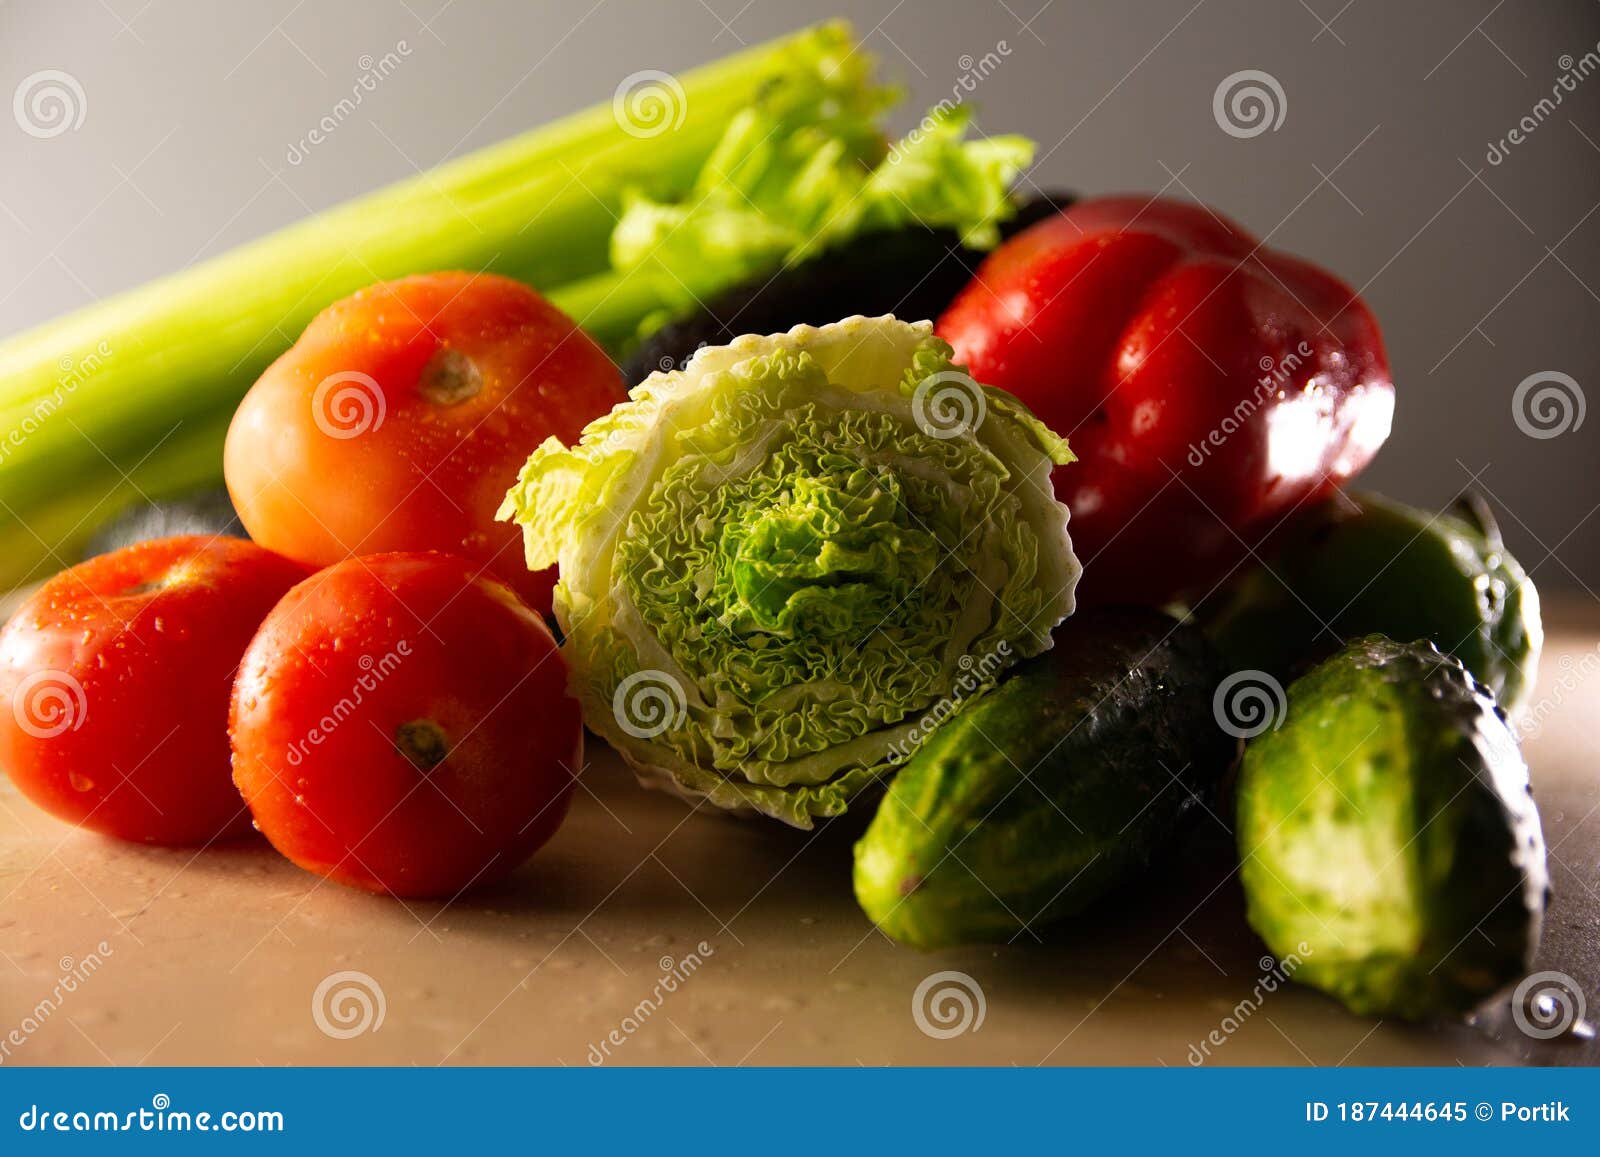 vegetables, wholesome food, amino acids, healthy breakfast